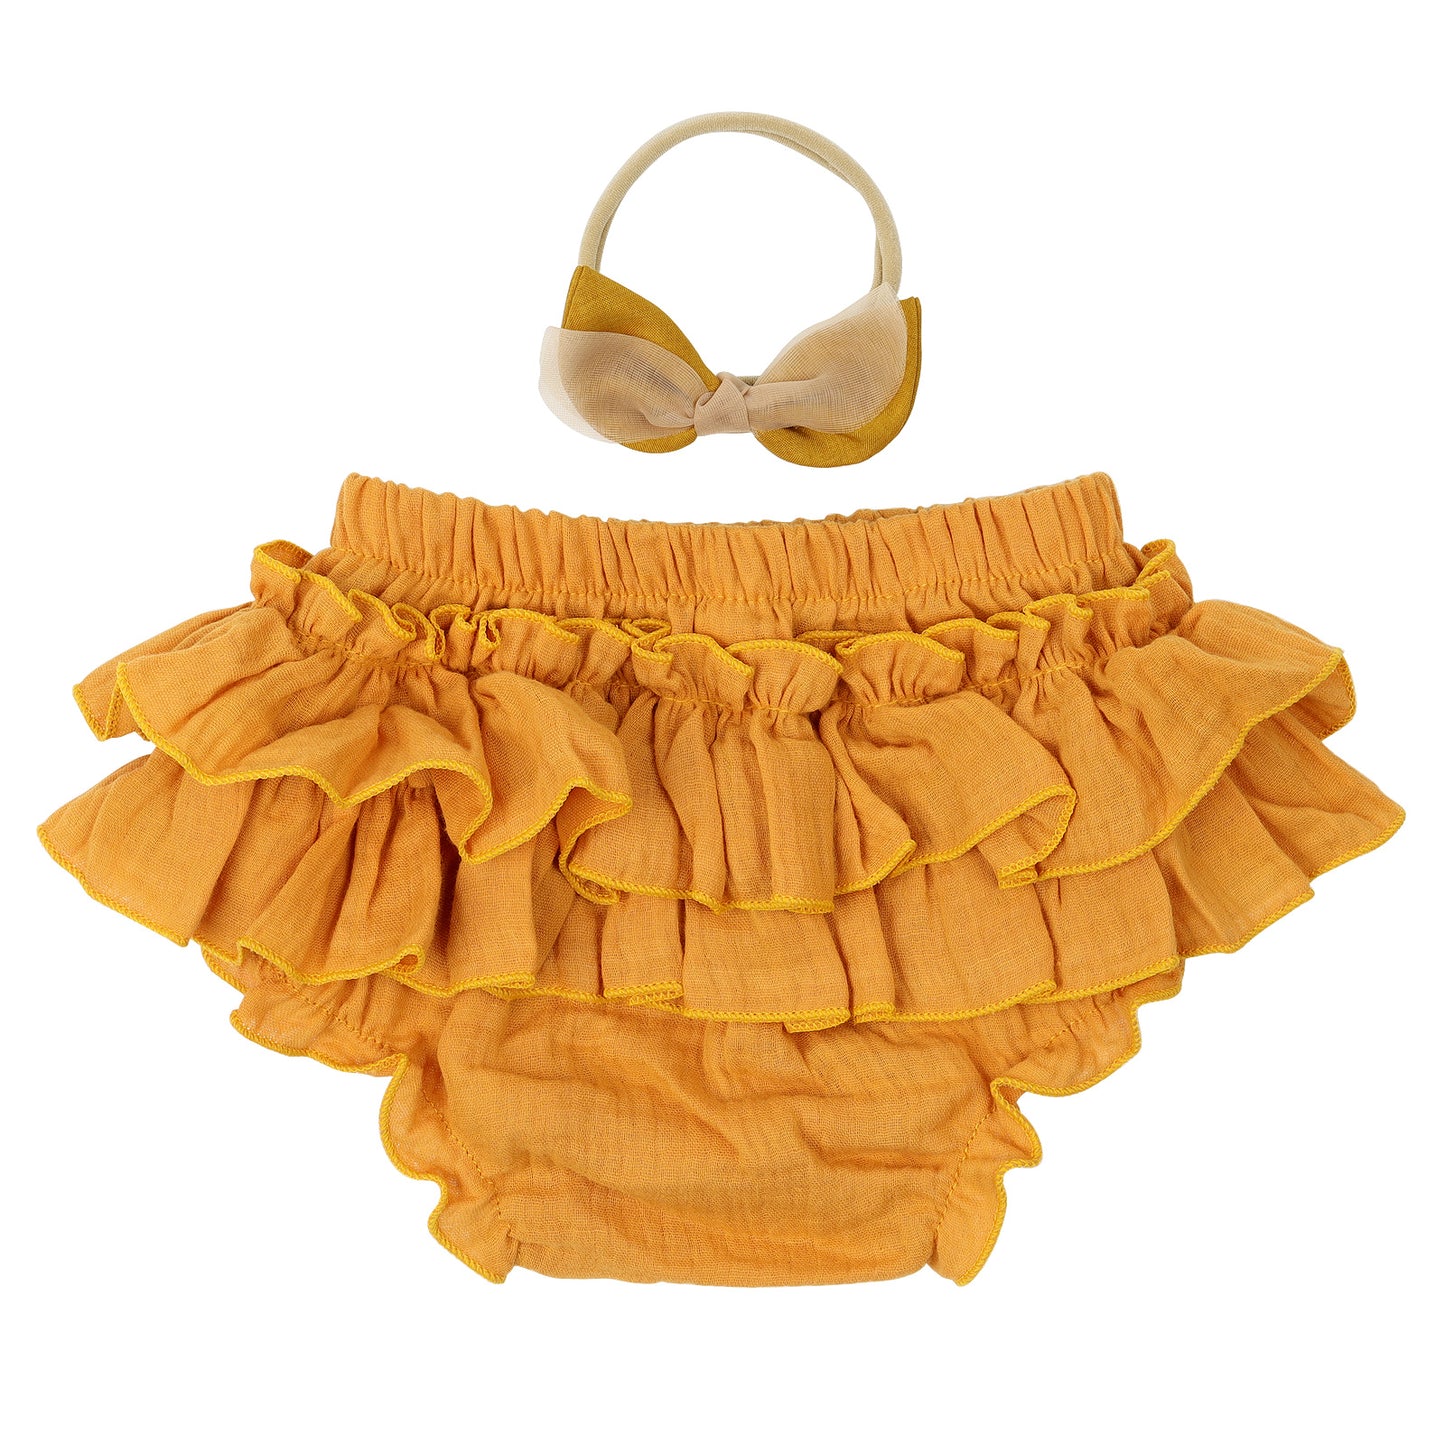 Baby Girls Cotton Gauze Ruffle Bloomer Shorts with Bowknot Headband